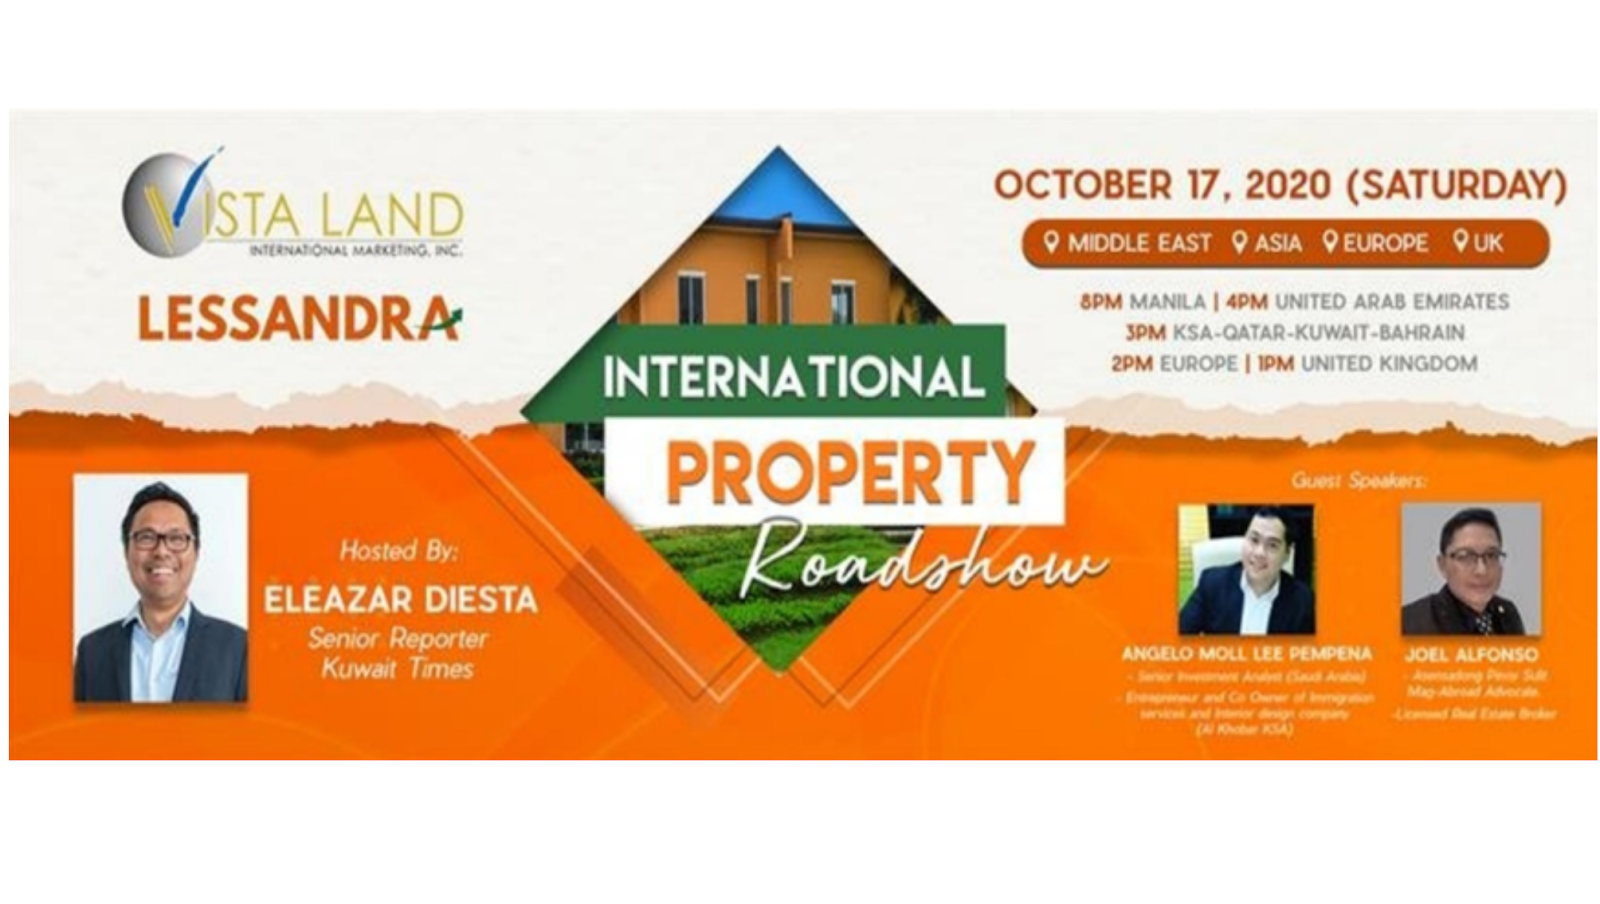 Lessandra International Property Roadshow